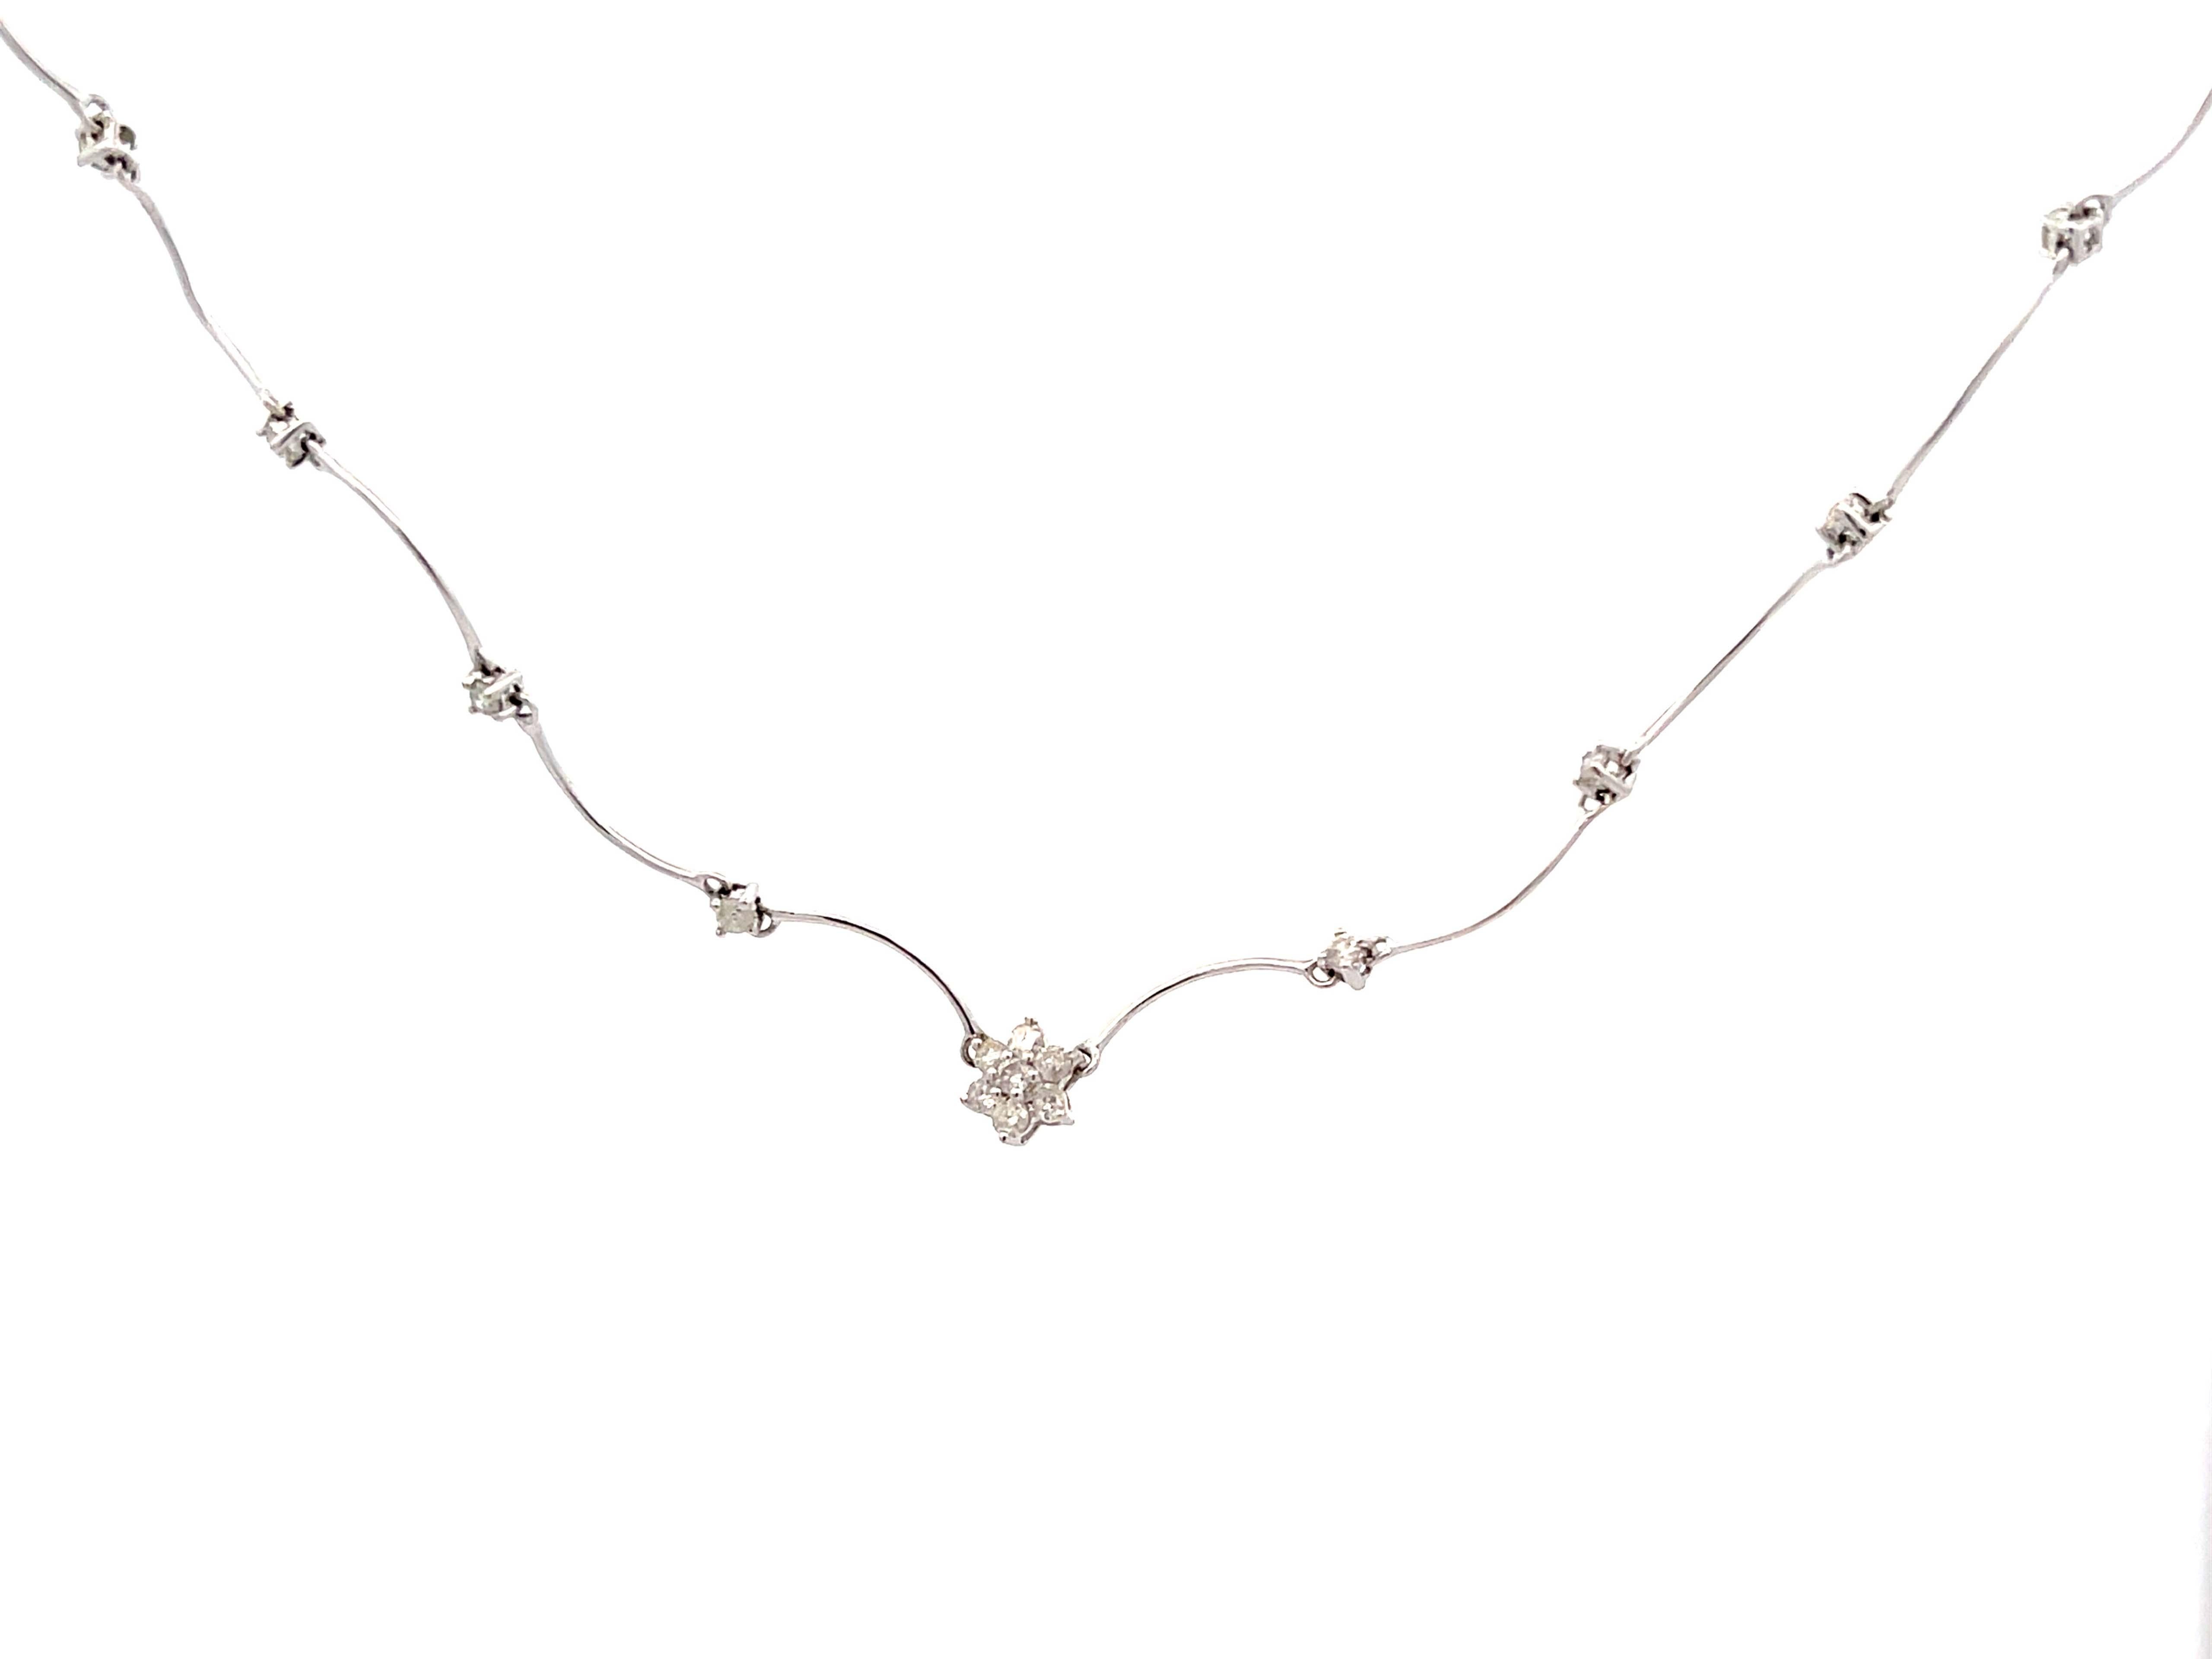 Brilliant Cut Wavy Diamond Flower Diamond Necklace in 18k White Gold